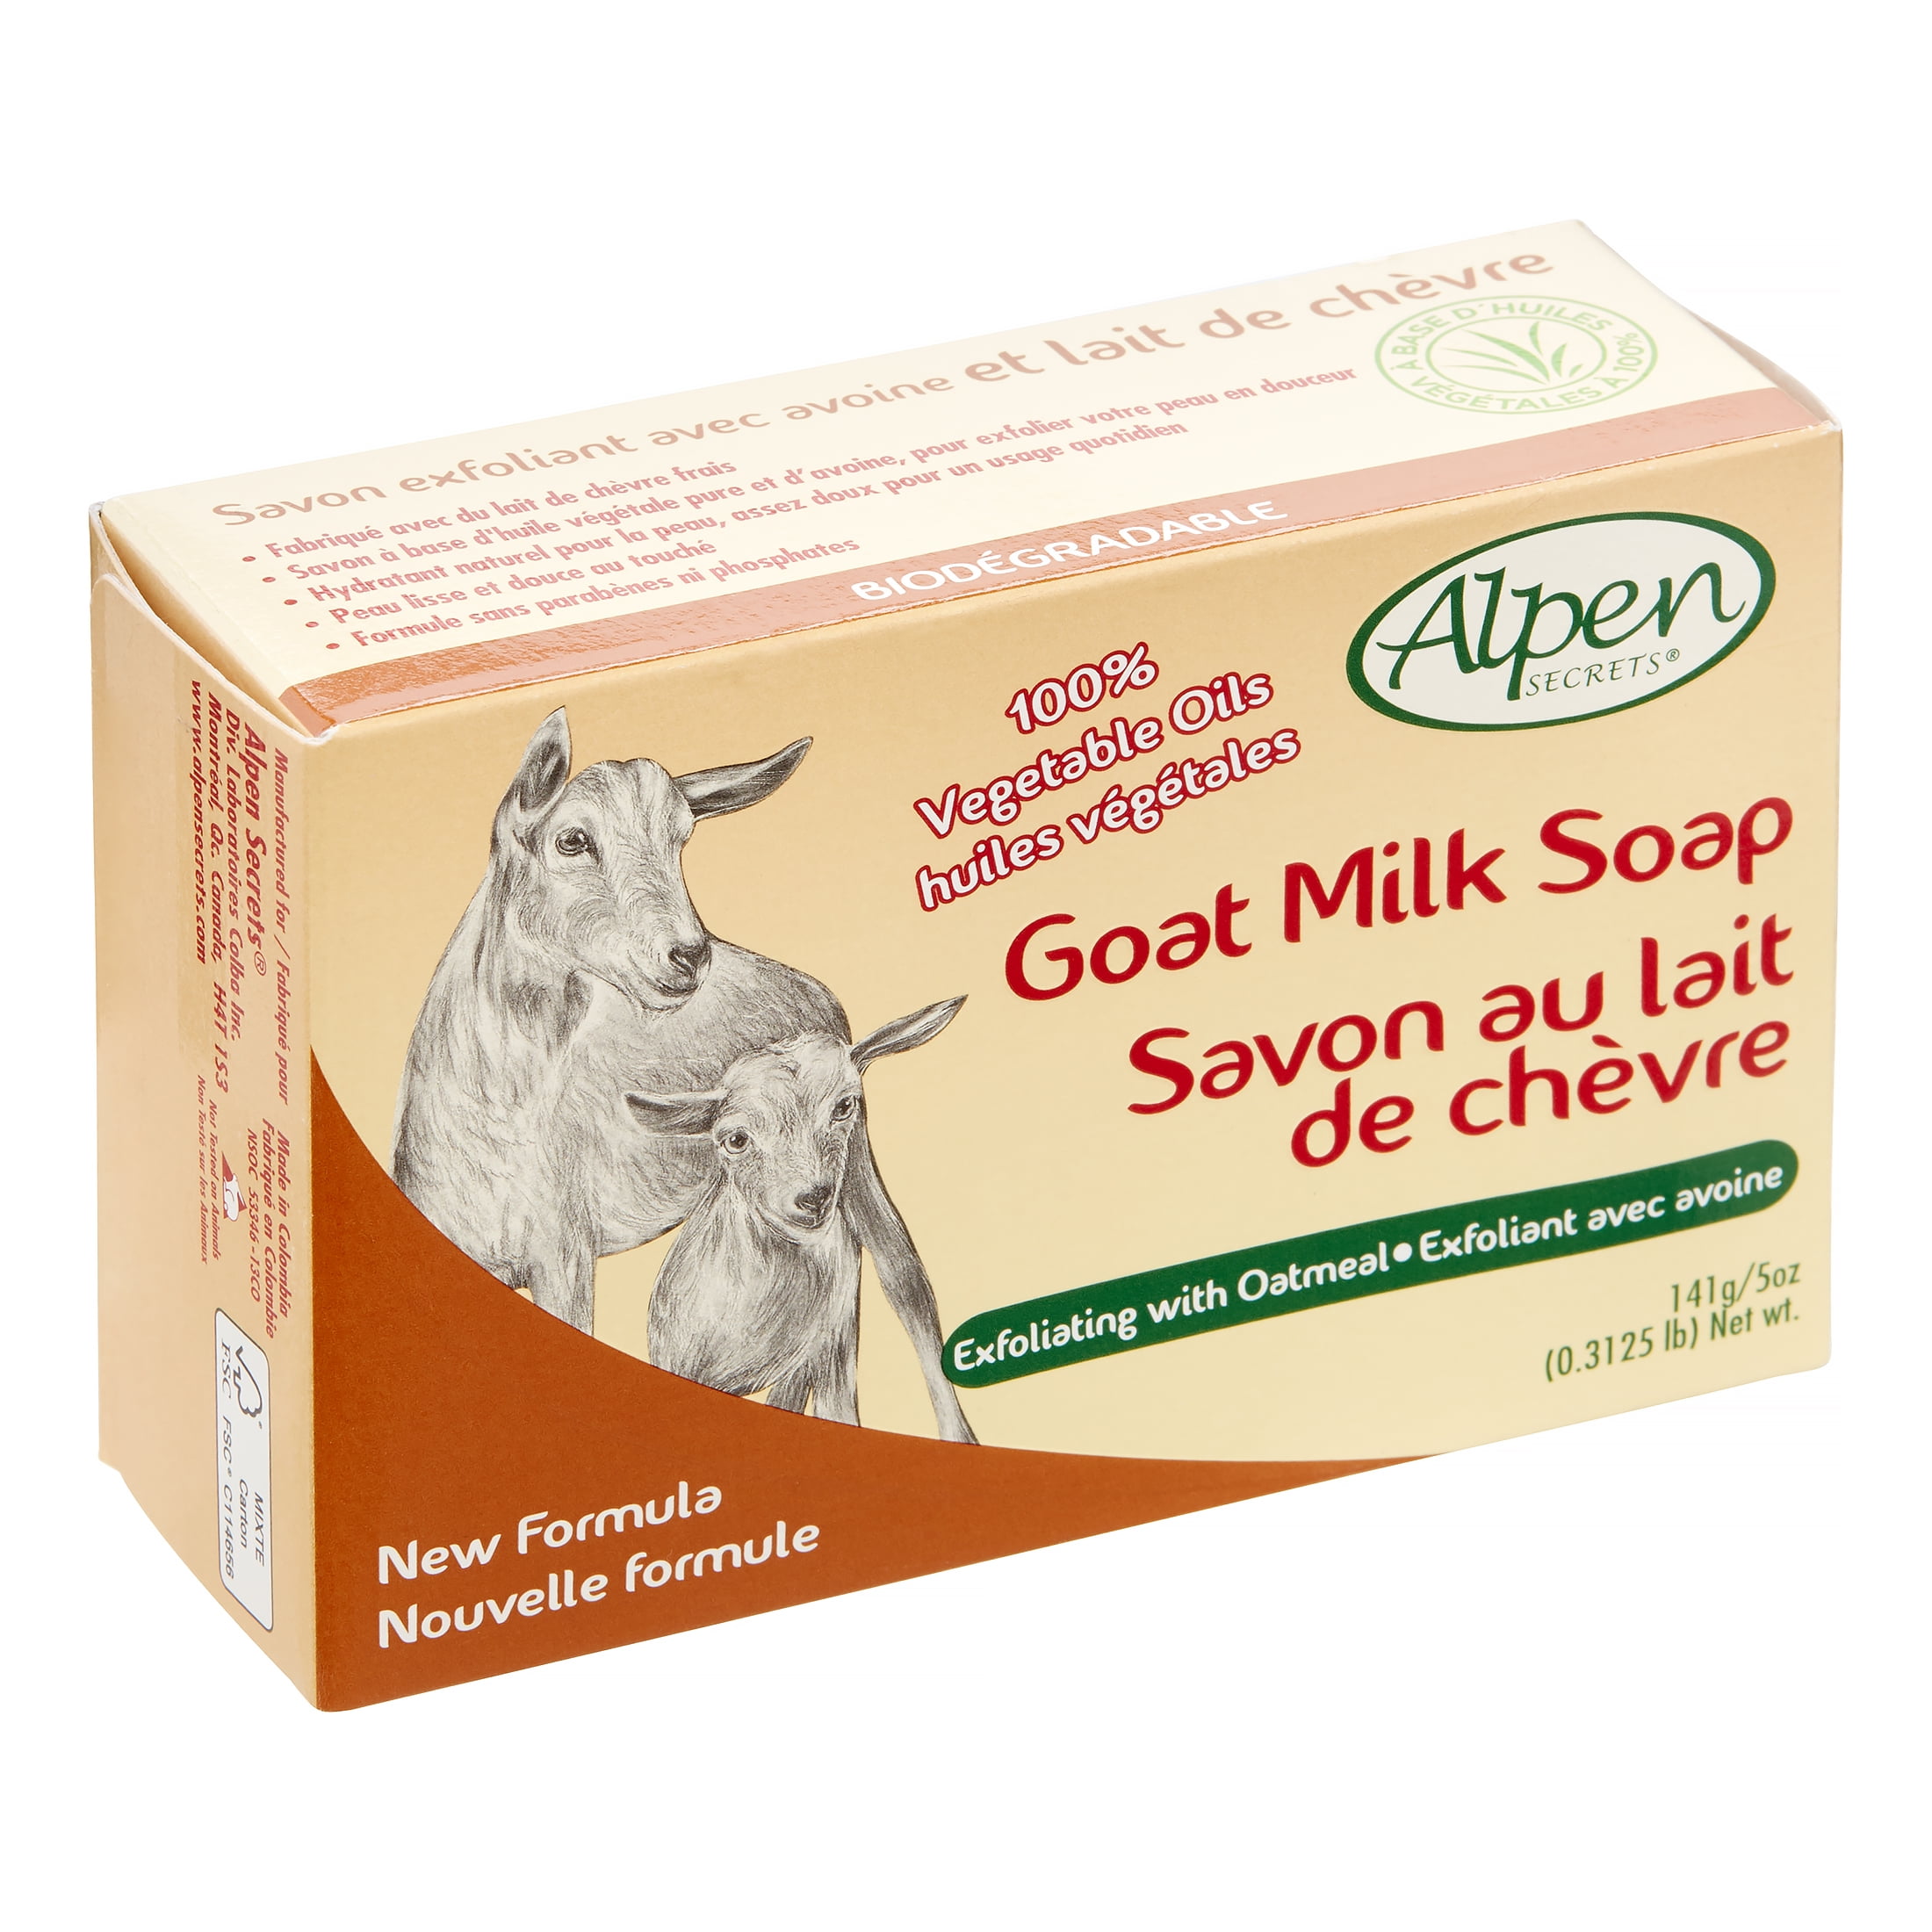 Alpen Secrets Goat Milk Wash 25 oz - Phoenicia Specialty Foods